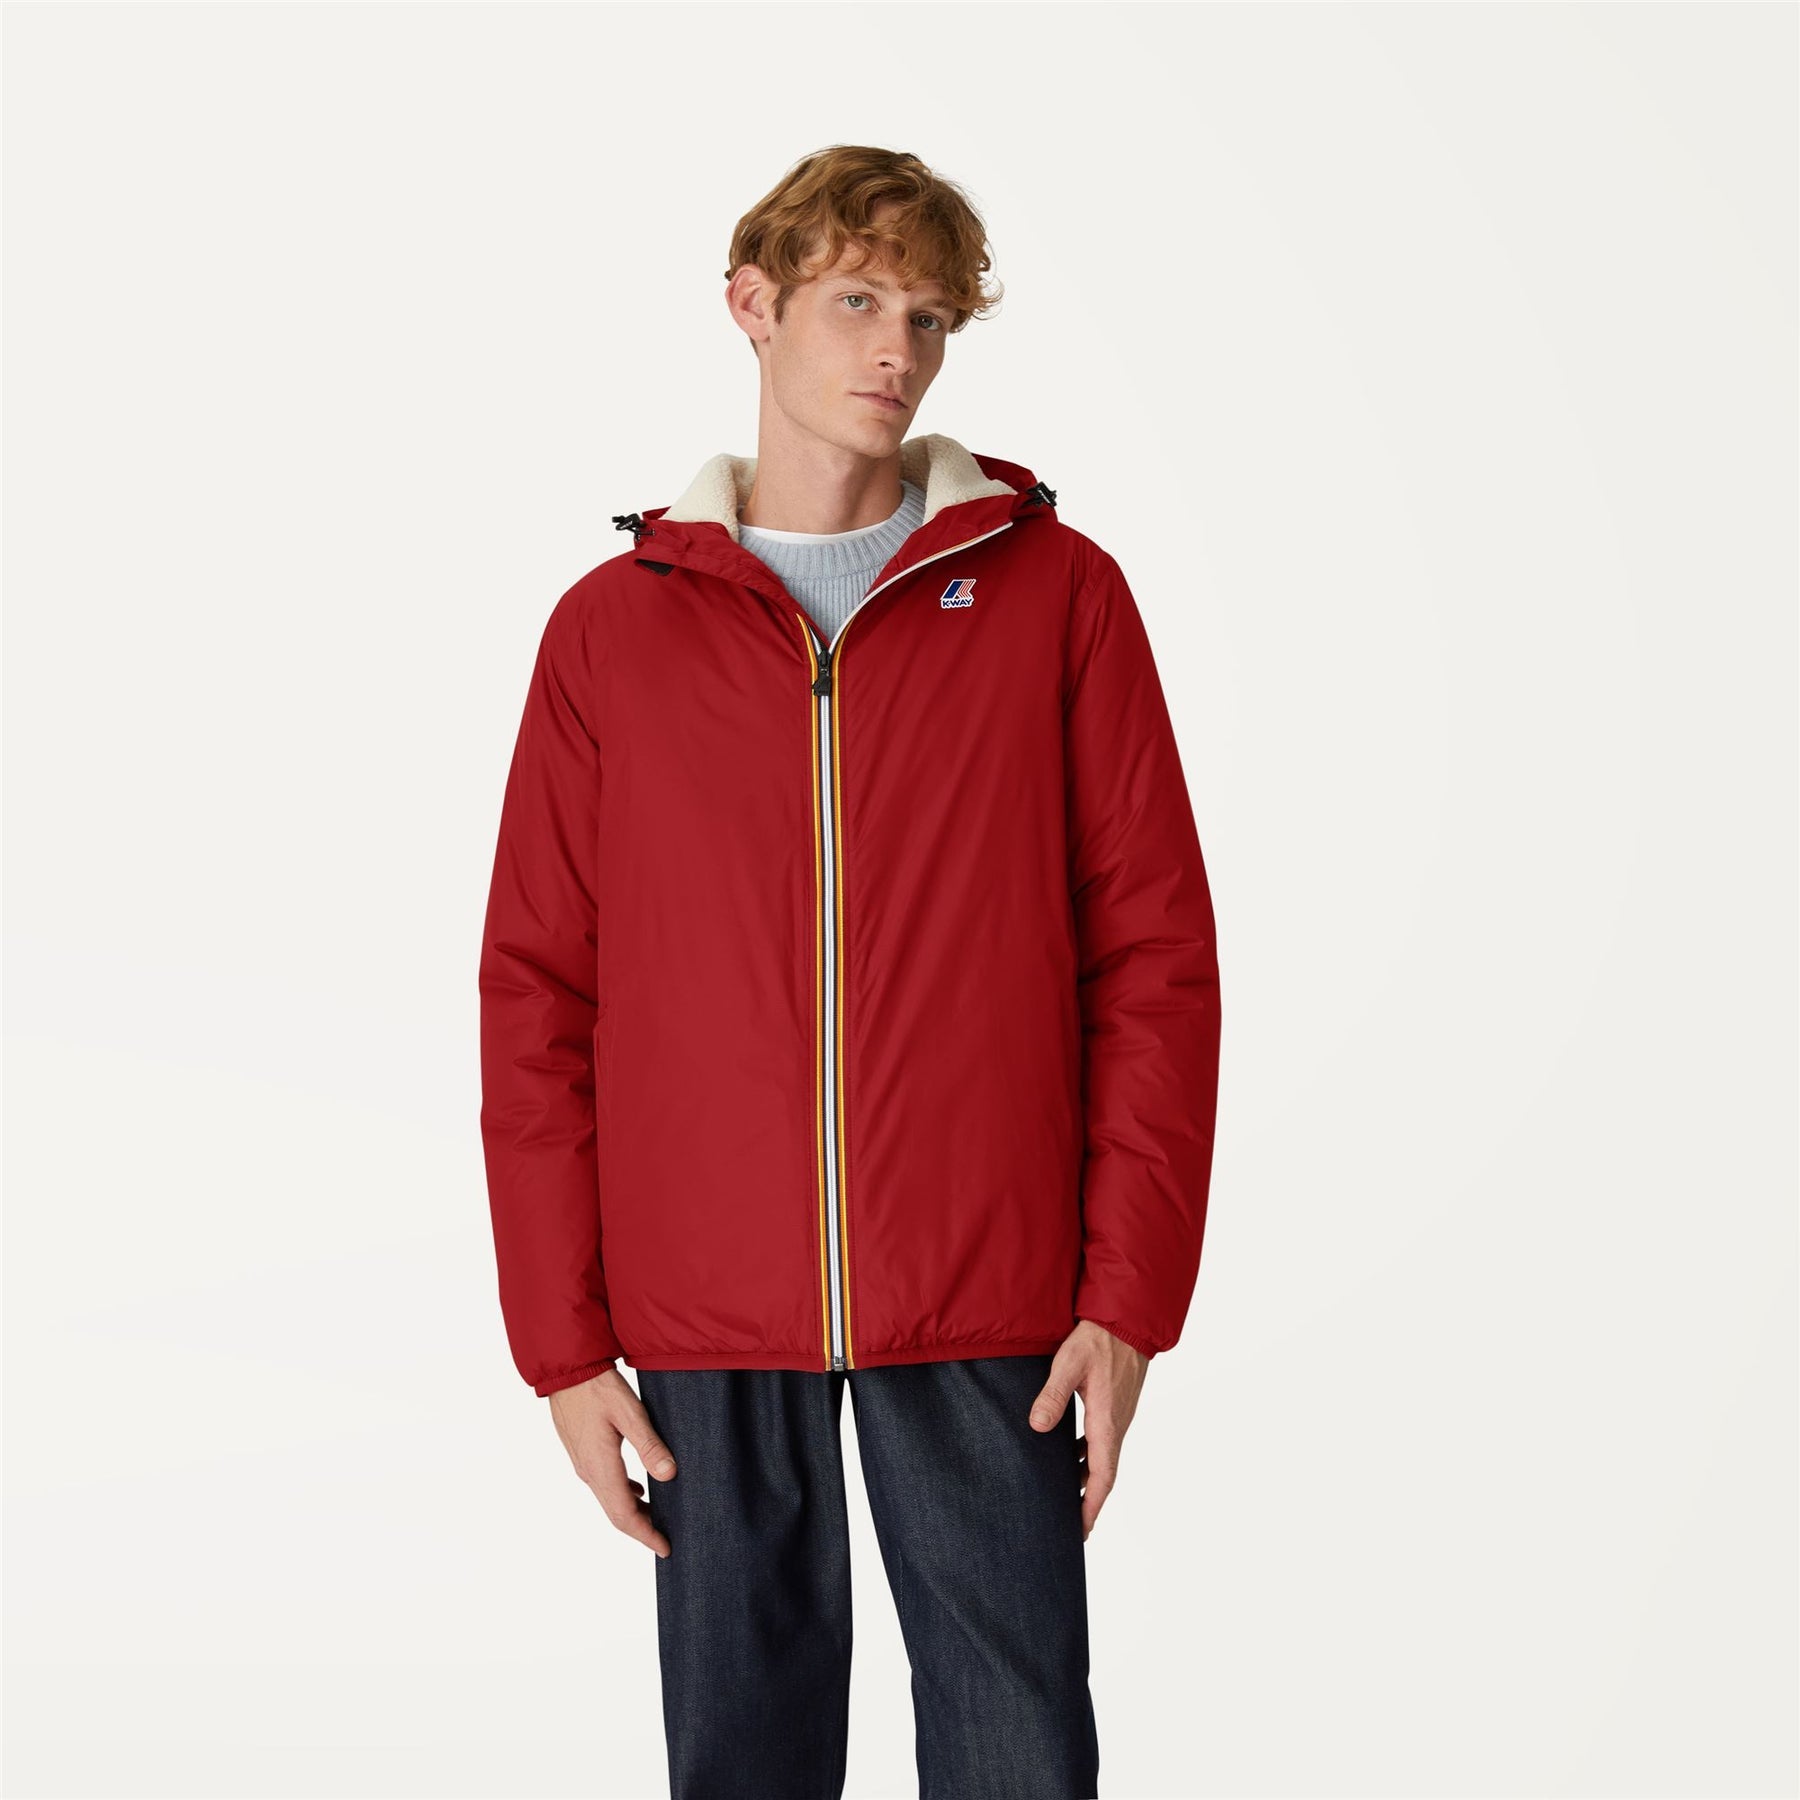 Claude Orsetto - Unisex Lined Full Zip Rain Jacket in Red Dk